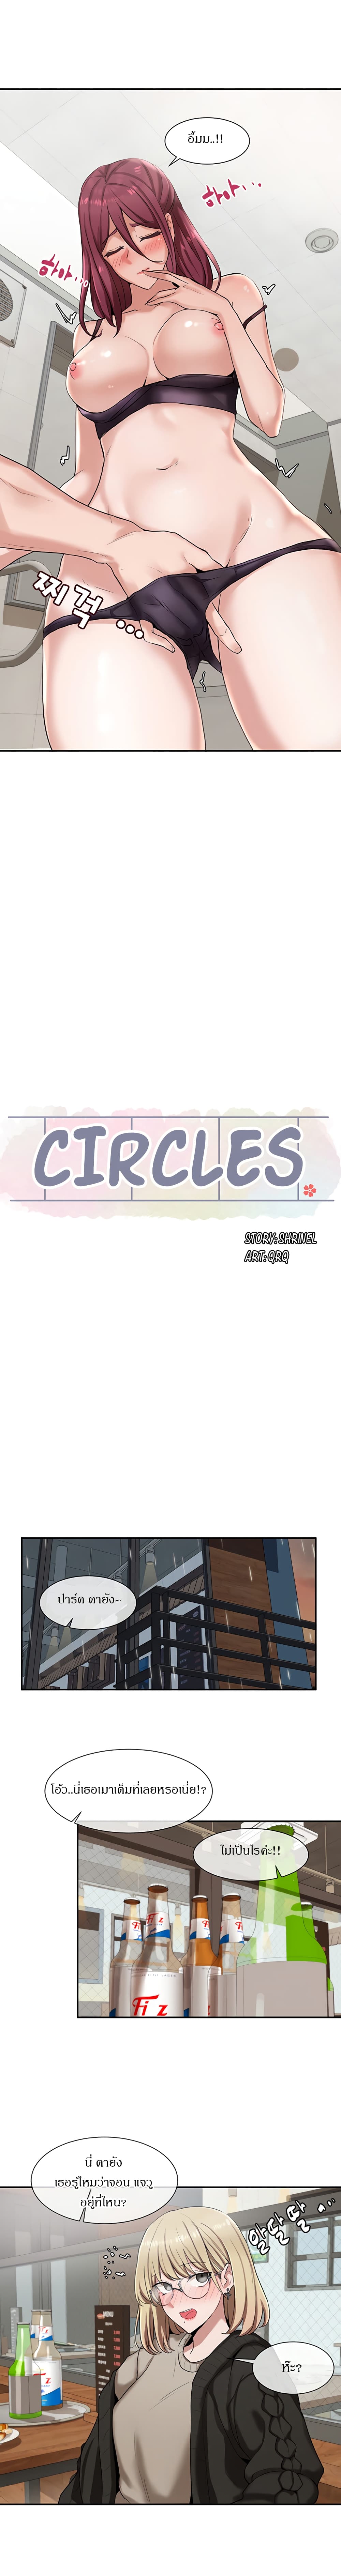 Theater Society (Circles) 7 (8)